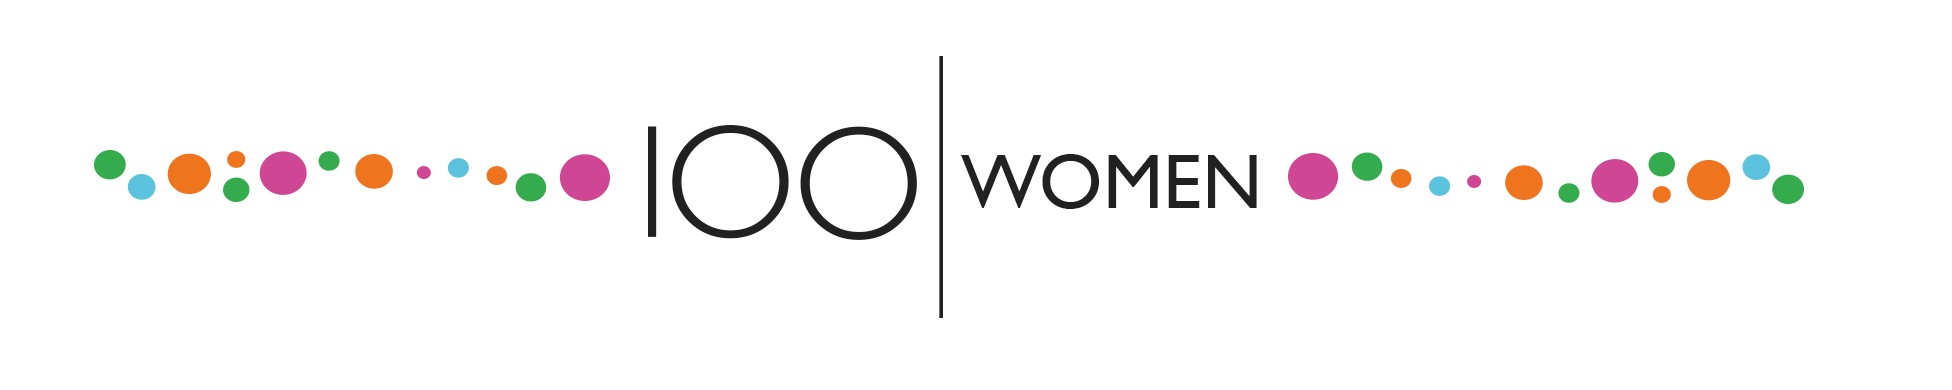 BBC 100 Women (Foto: BBC News)